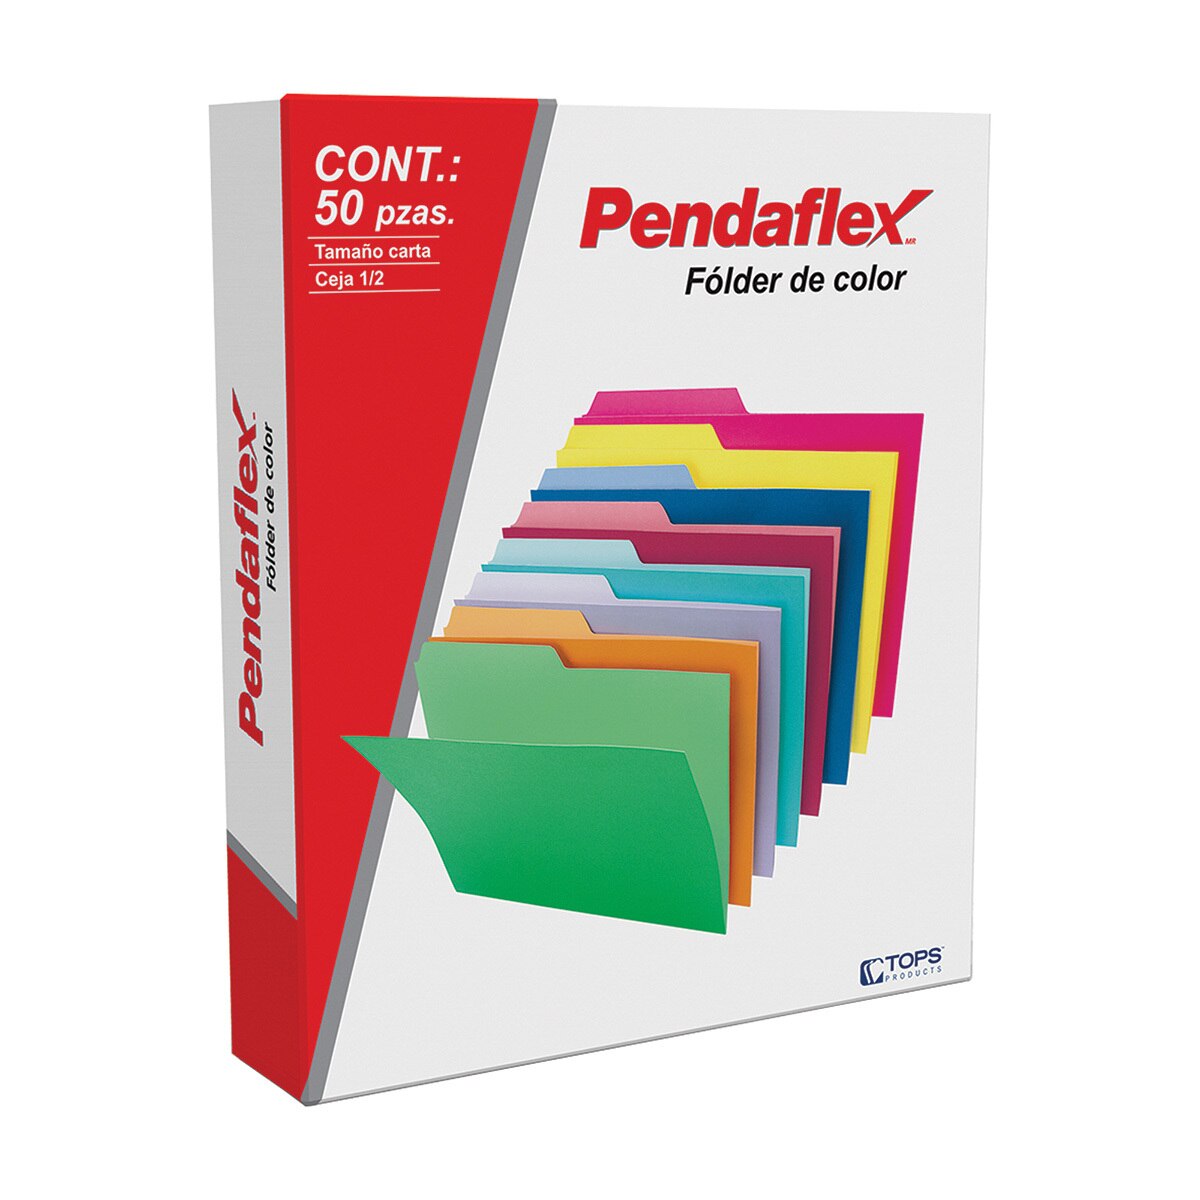 Pendaflex folders tamaño carta colores intensos